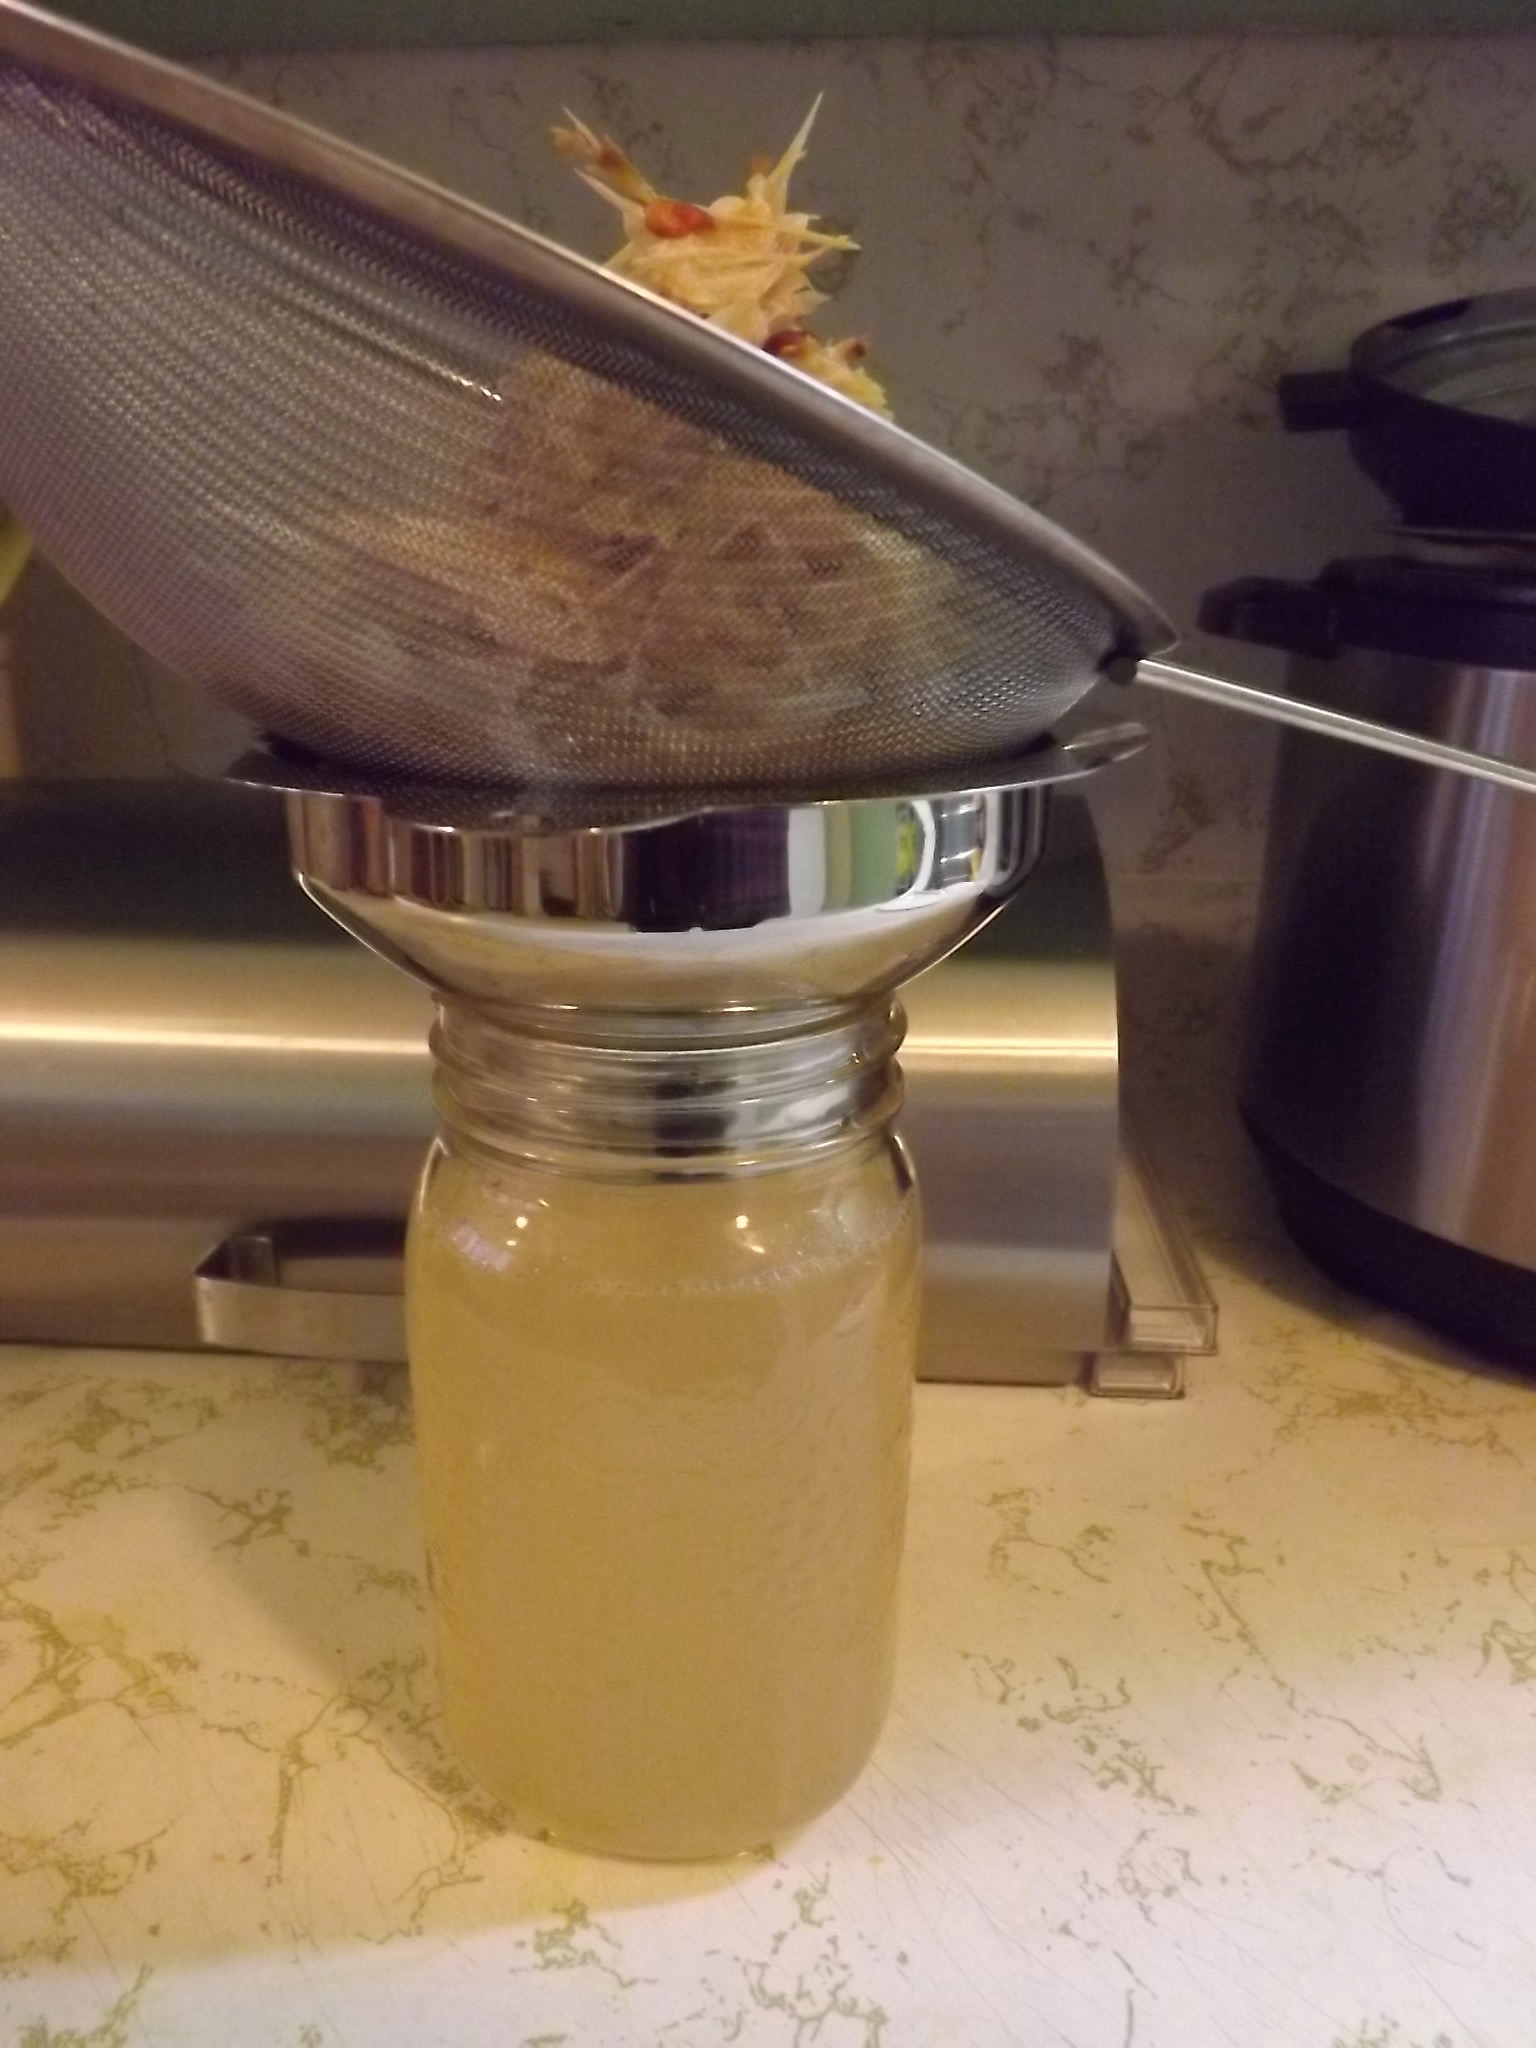 sieve of apple mash draining on coffee filter